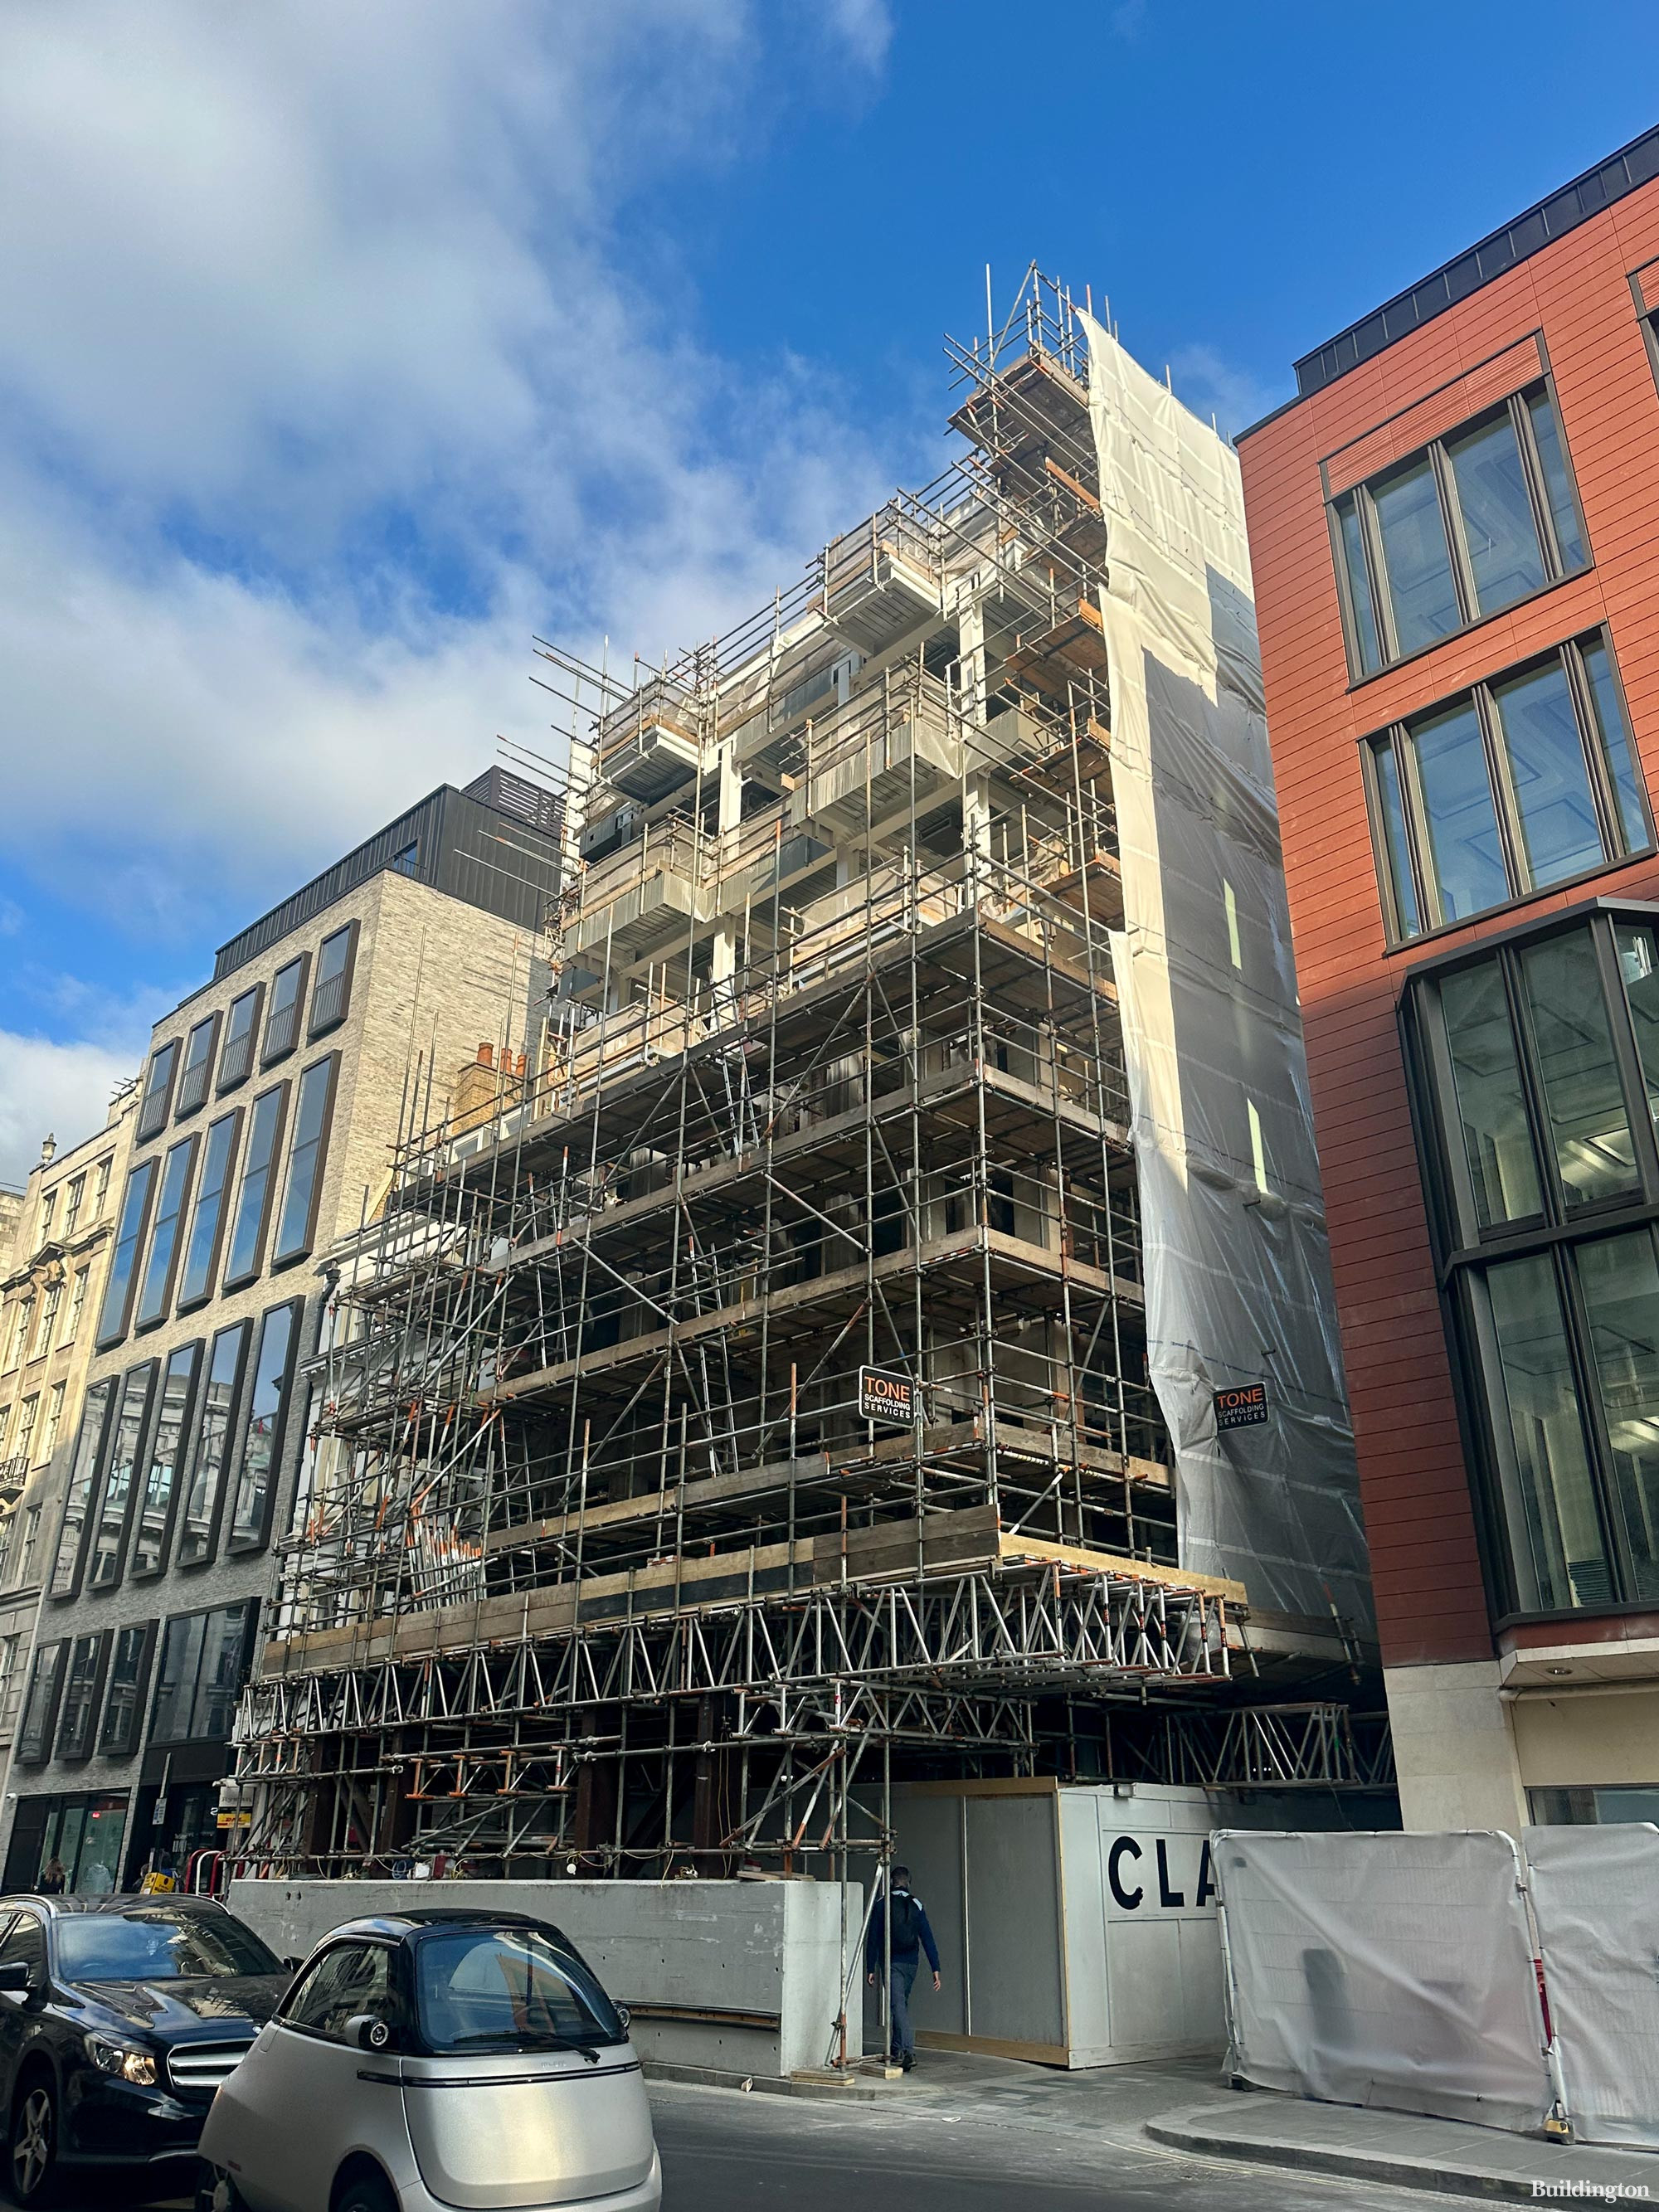 13-14 Hanover Street under construction in Mayfair, London W1.